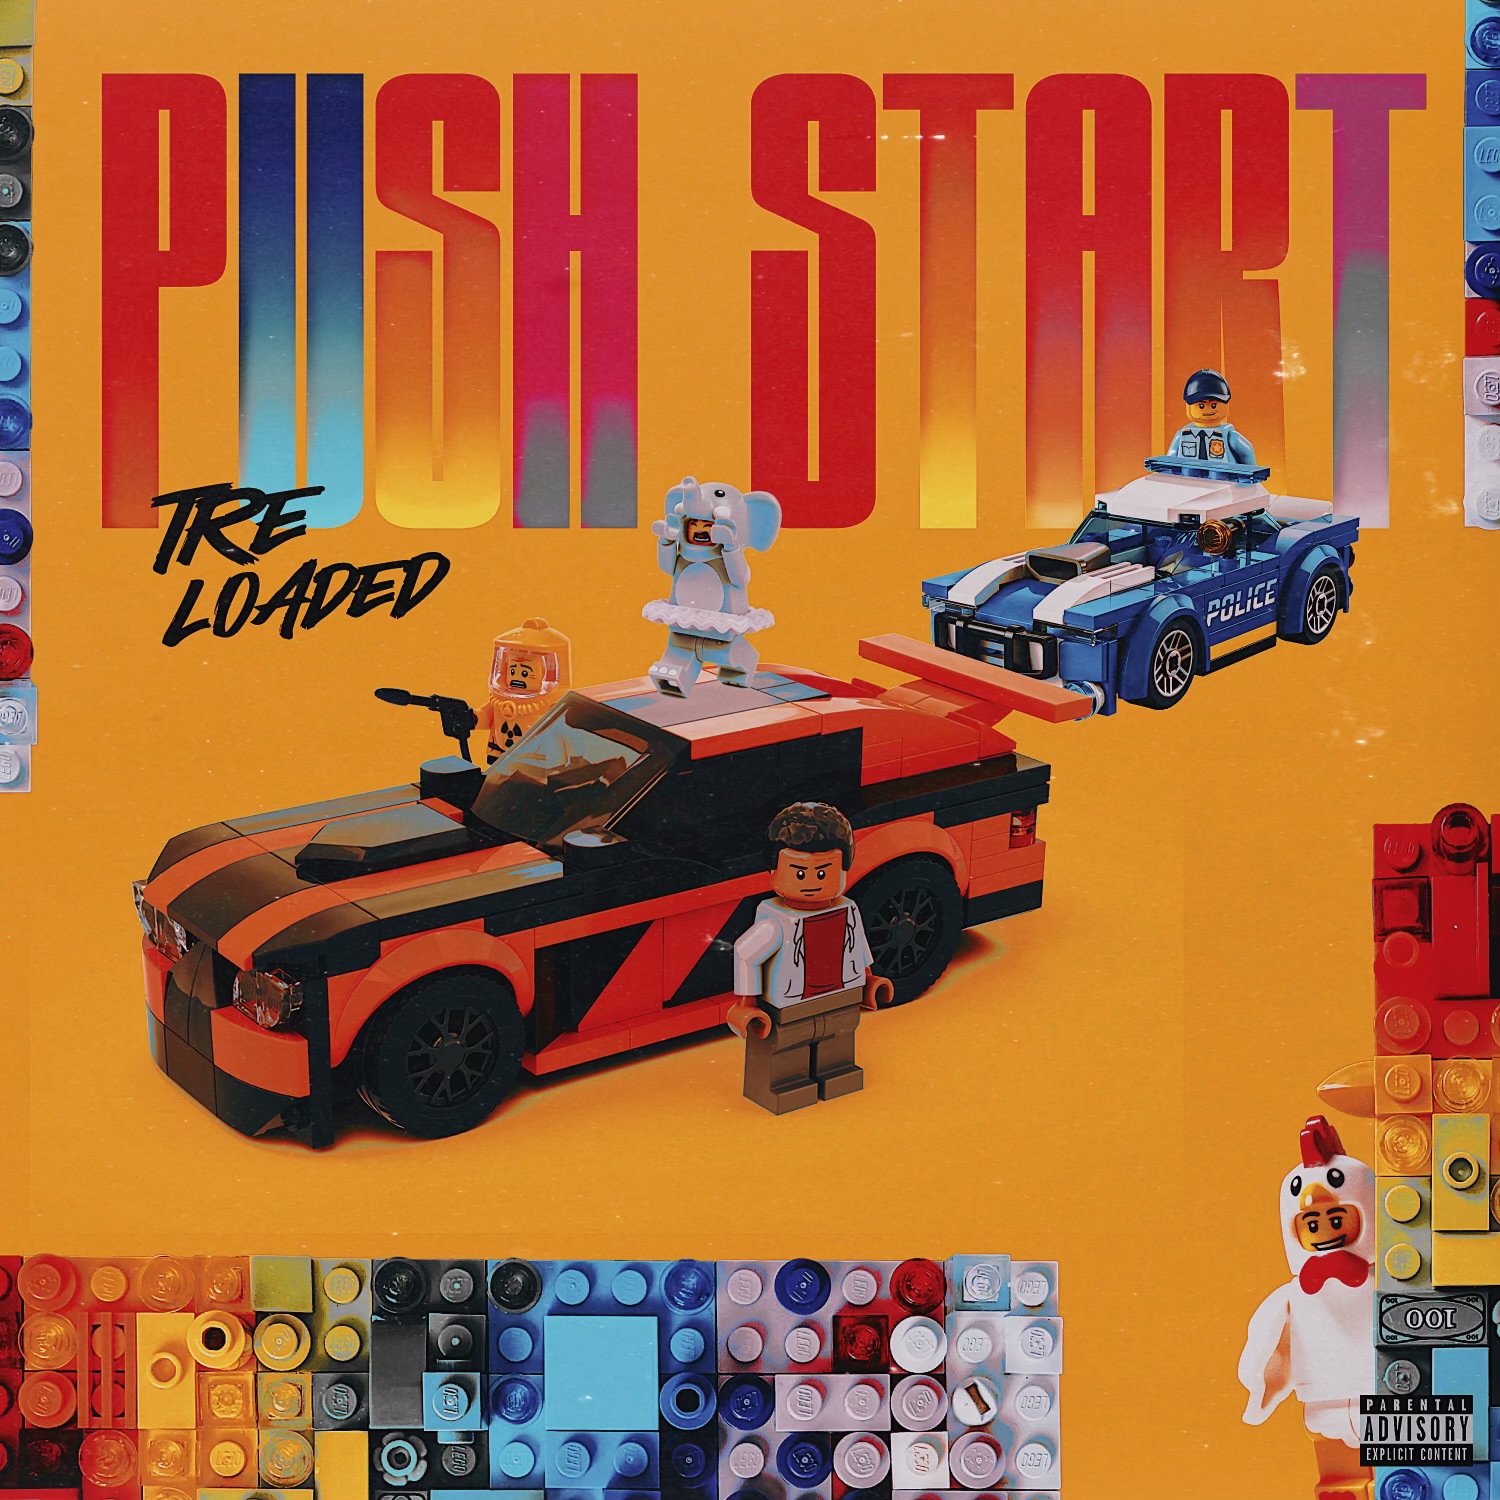 Memphis Riser Tre Loaded Fulfills His Need For Speed In “Push Start” Single